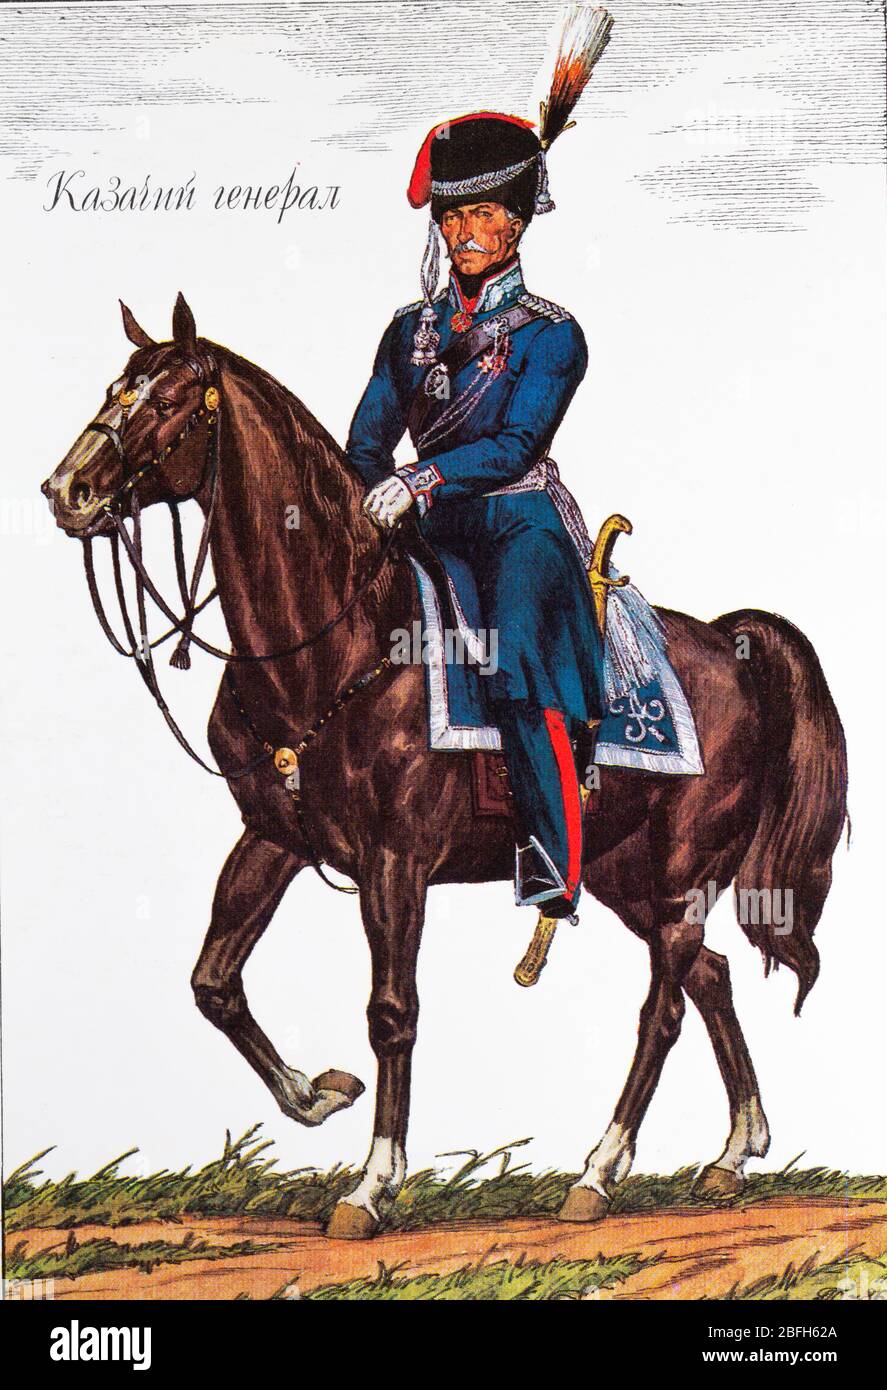 Cossack general, 1812, 19th century Russian army uniform, Russia Stock Photo